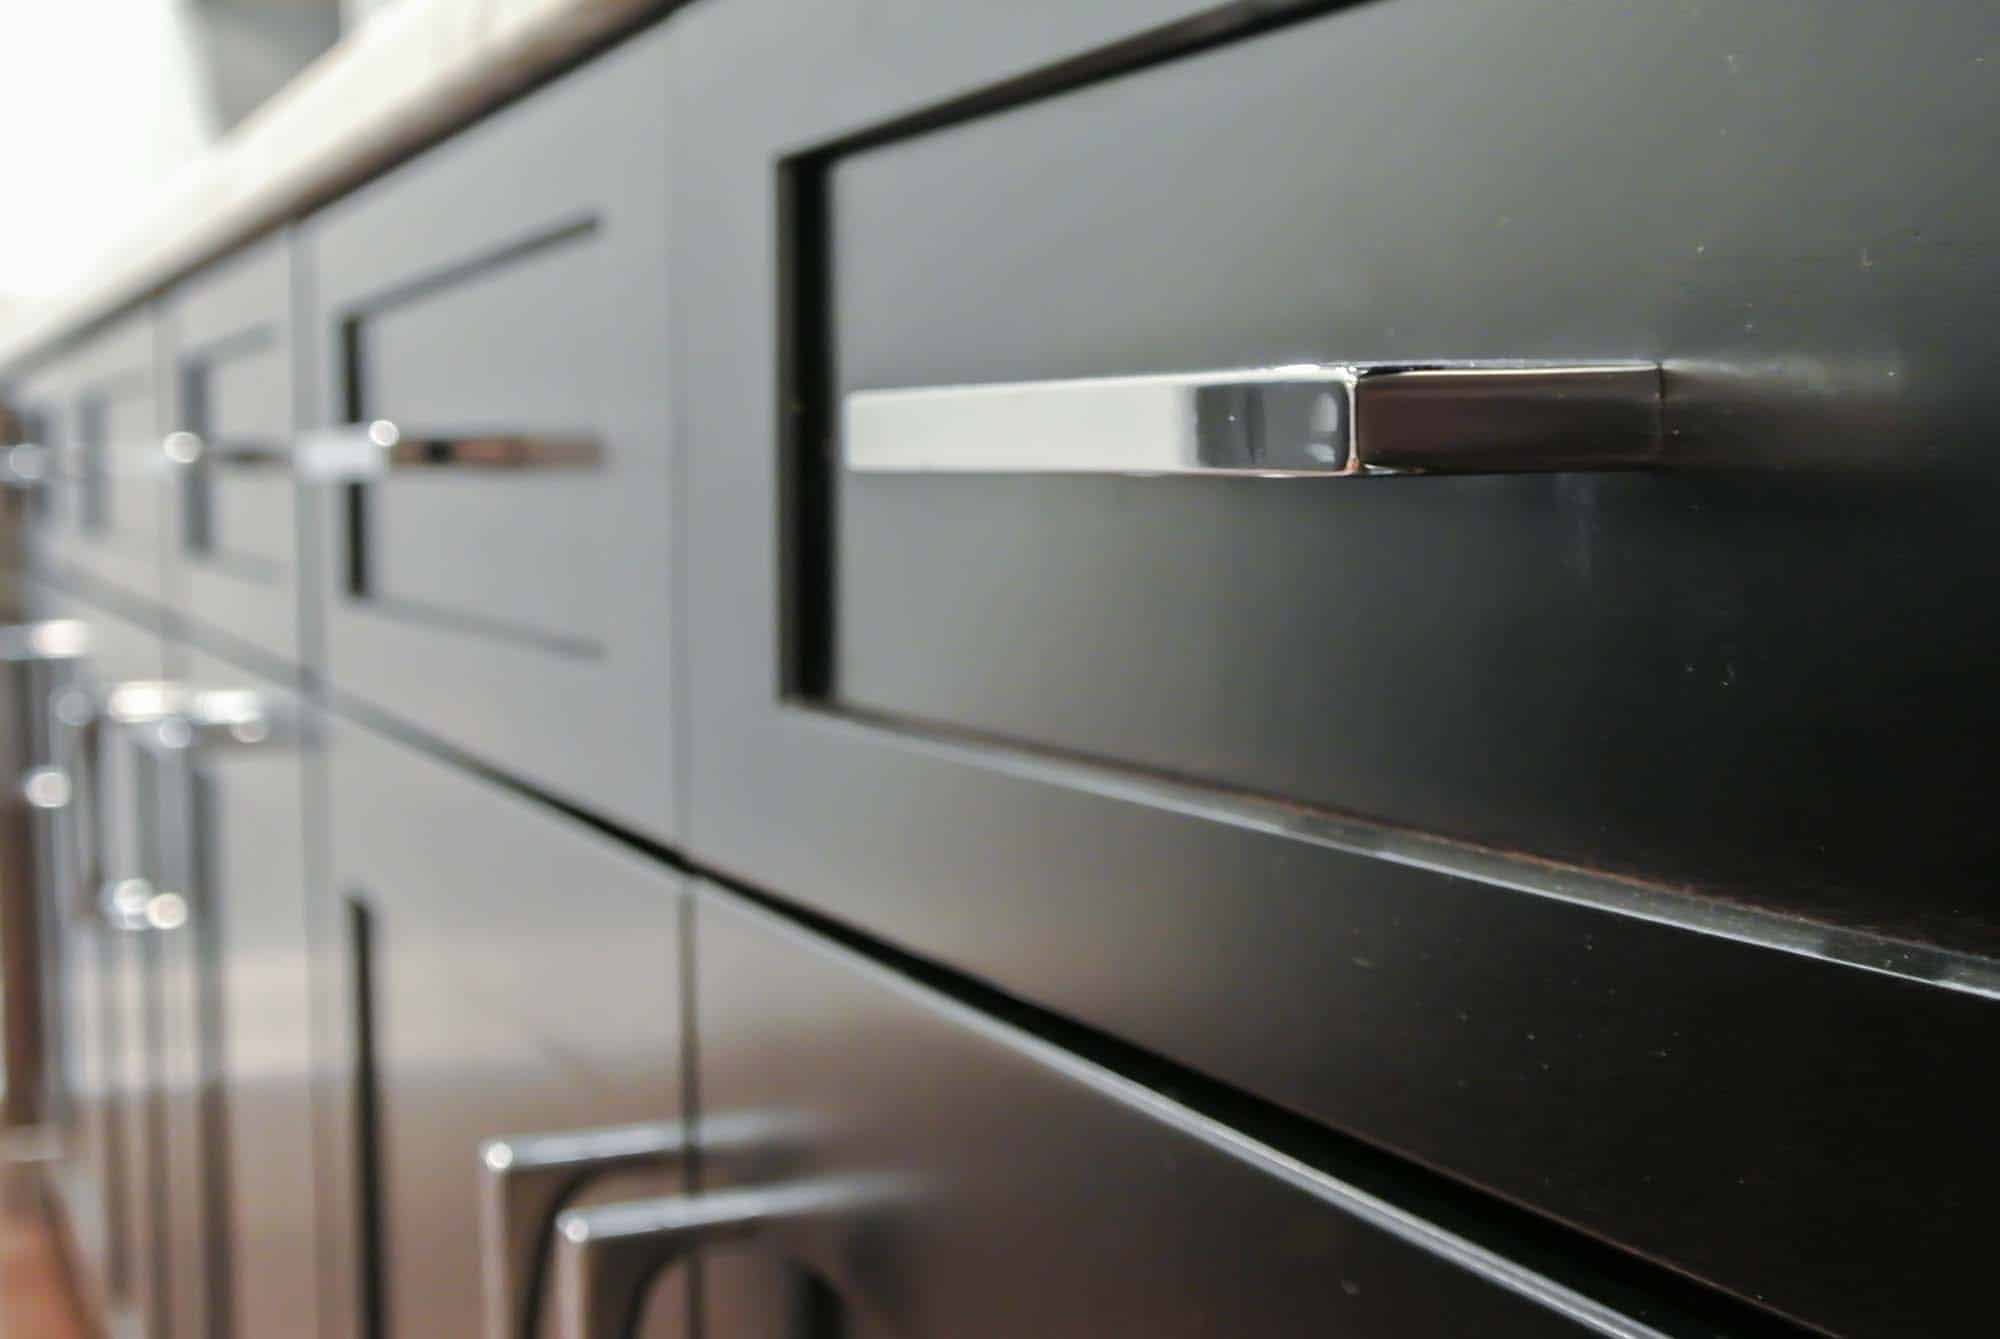 How to Choose Kitchen Cabinet Pulls  Kitchen cabinet pulls, Kitchen design  modern contemporary, Kitchen drawer pulls